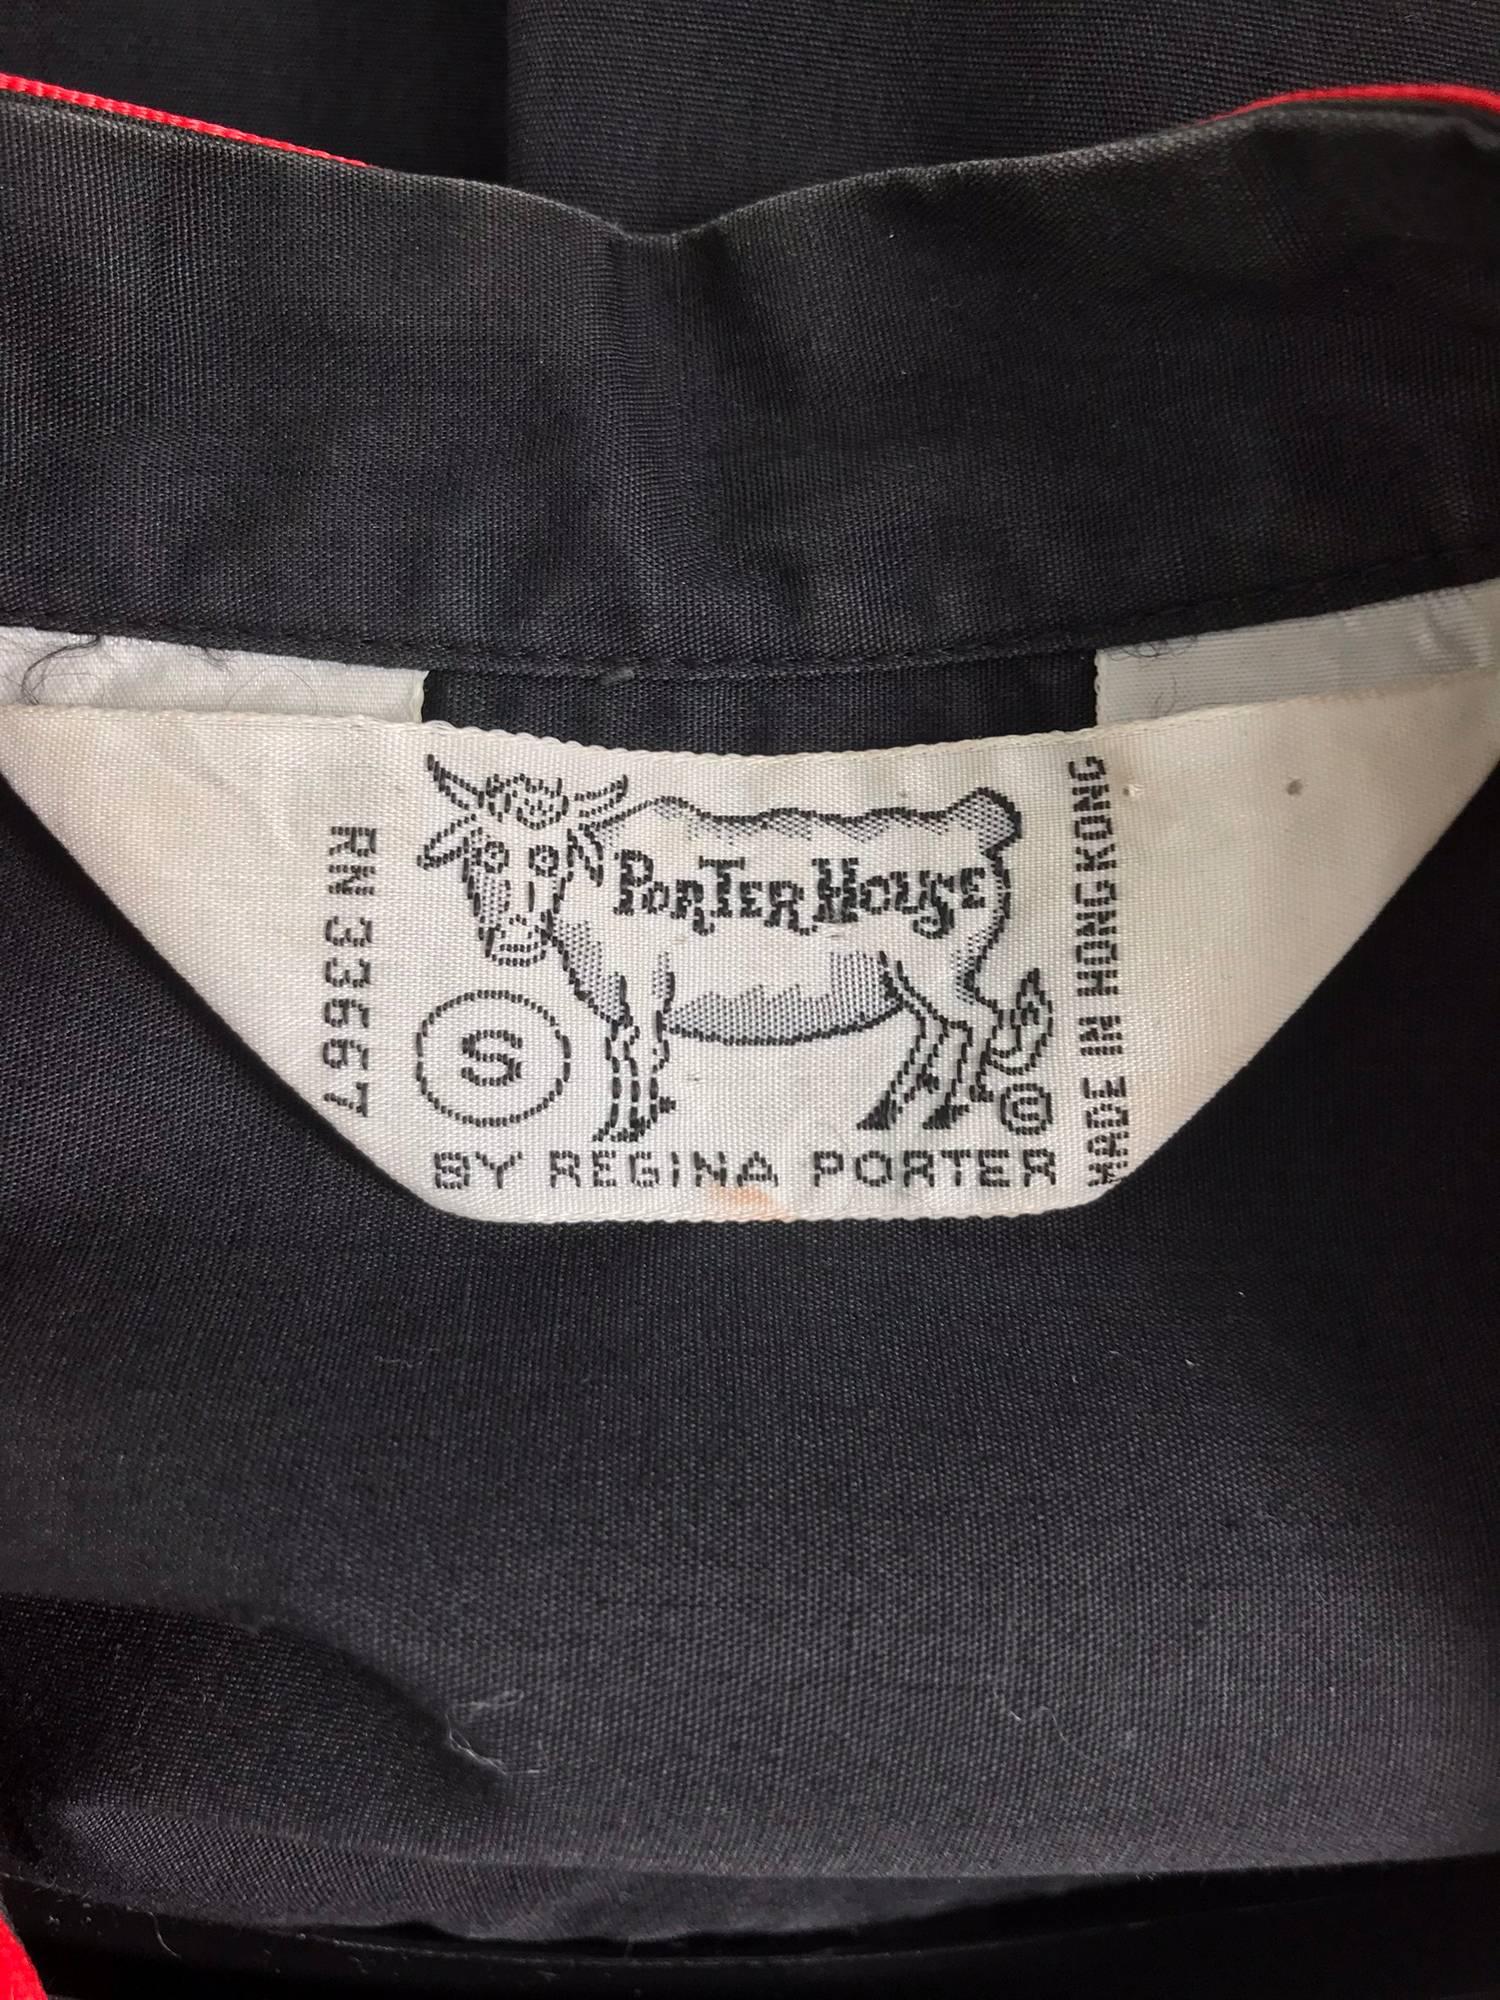 Porter House Regina Porter black cotton ribbon trim peasant blouse 1970s 6